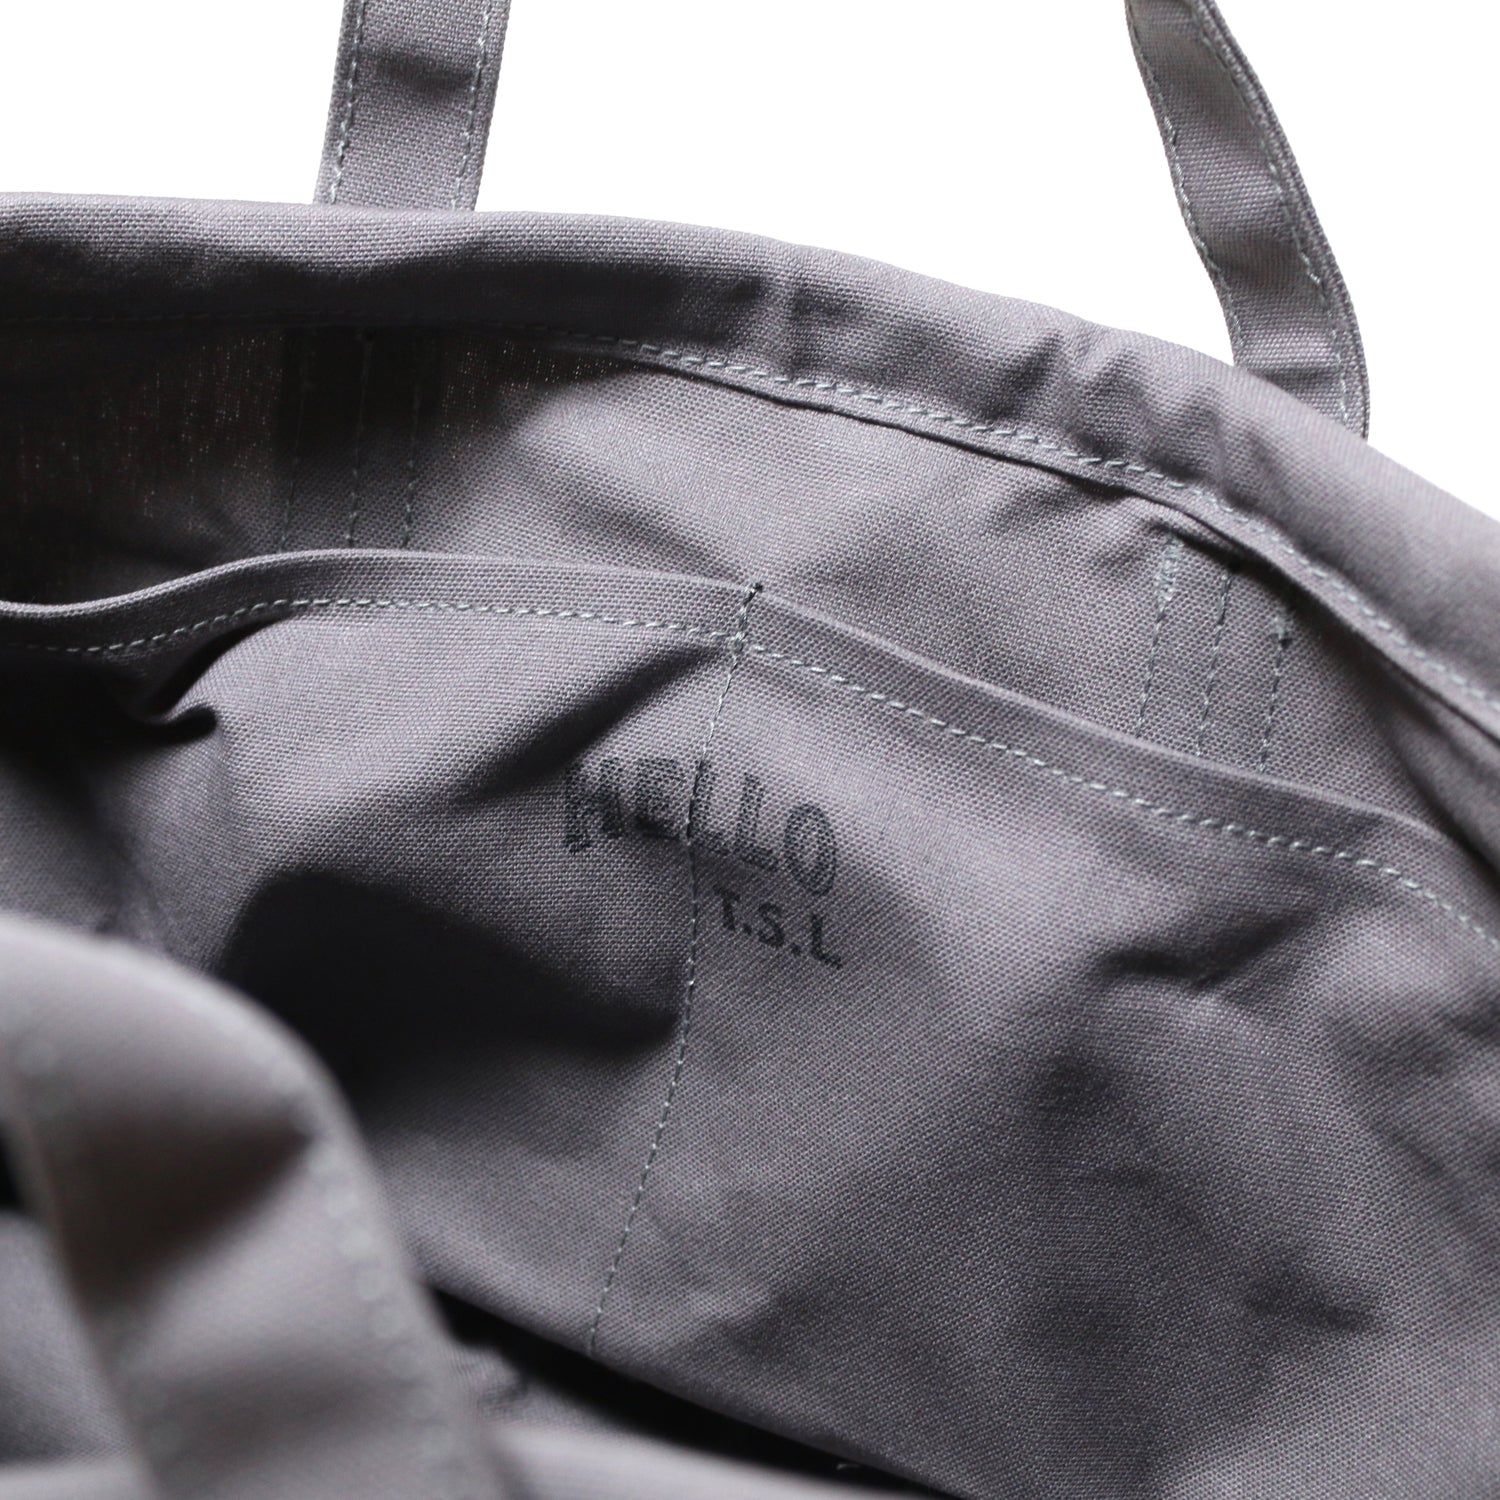 SL024  ”Hello TSL” tote bag shallow